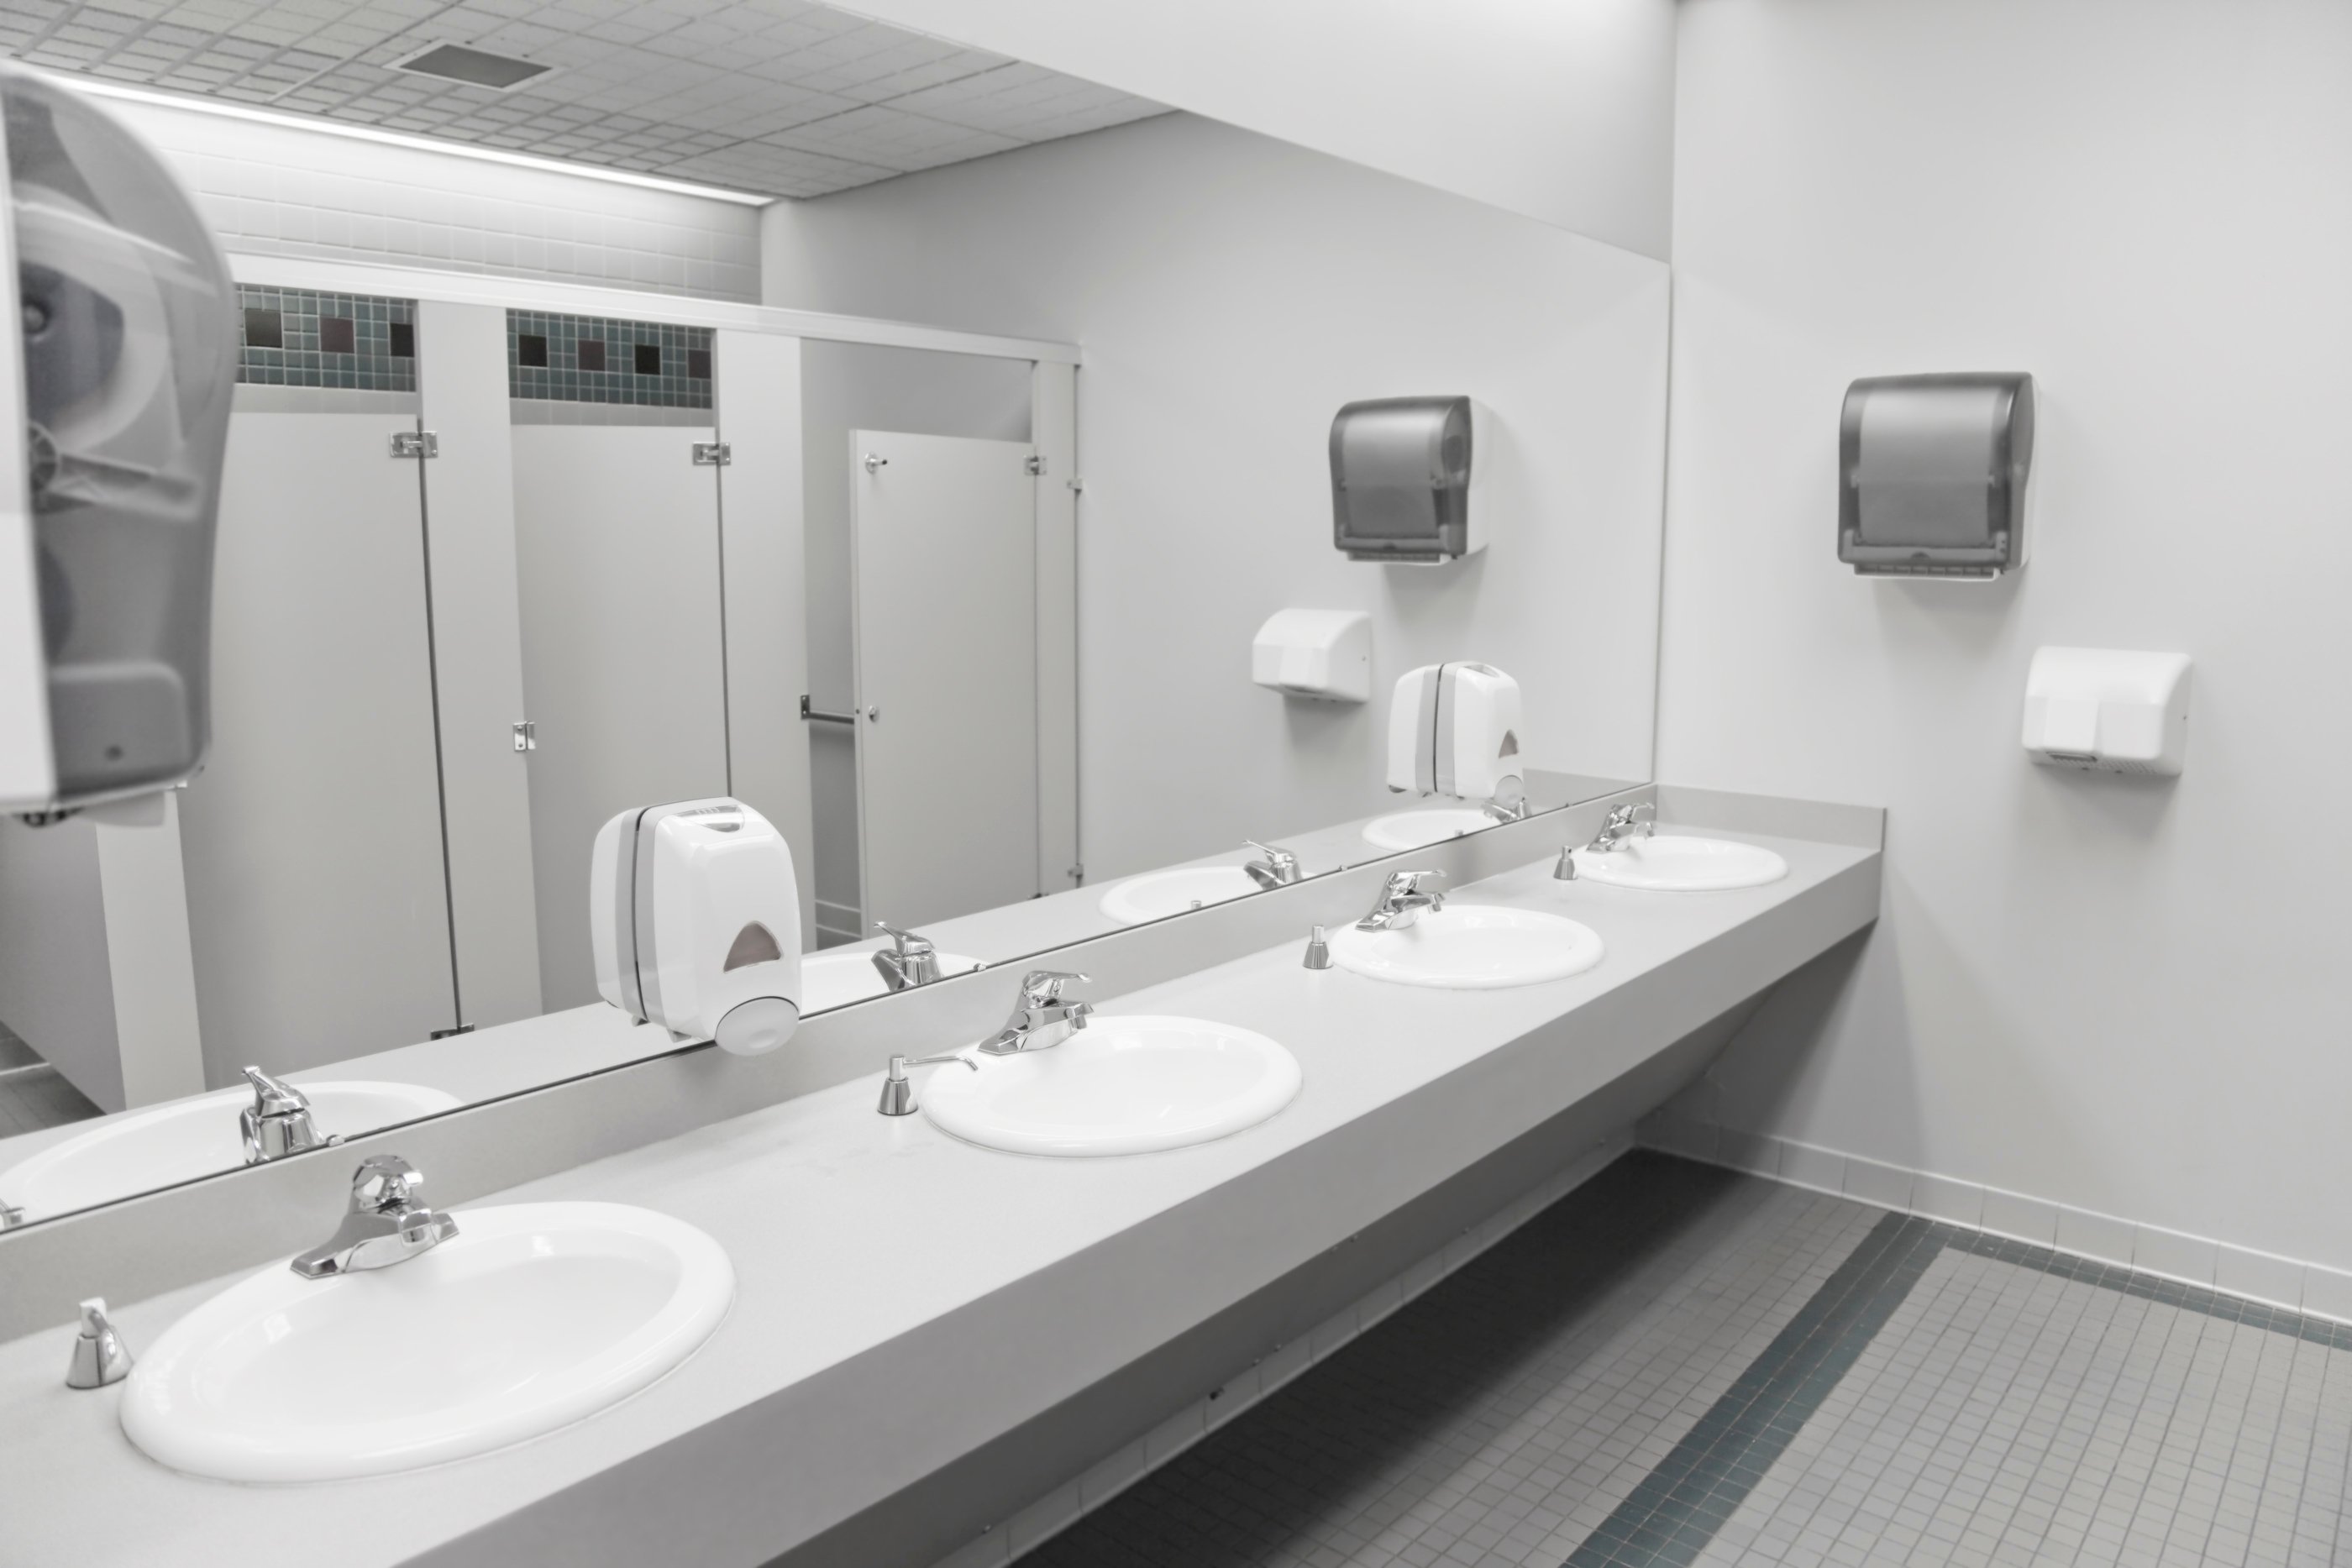 Commercial Bathroom Vanity Design